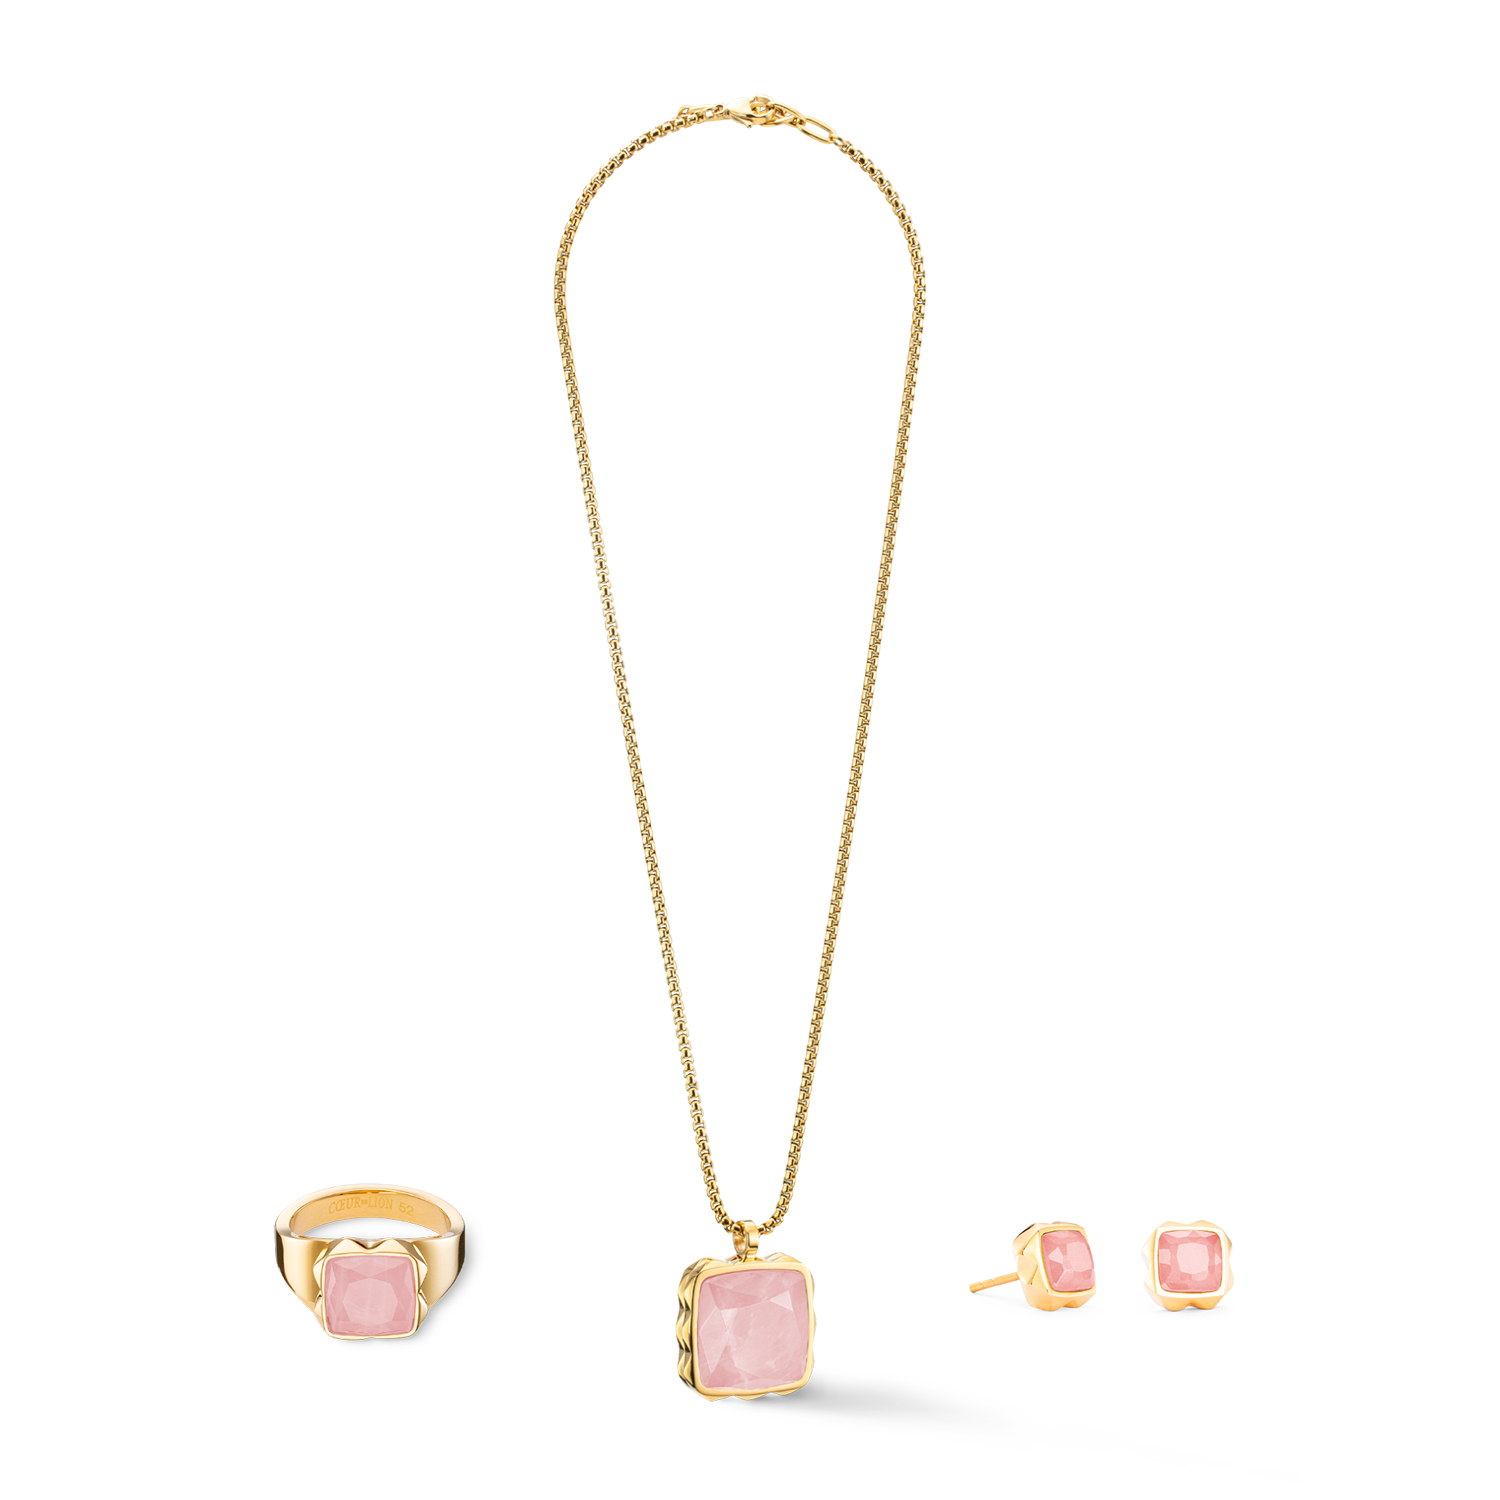 Necklace Amulet Spikes Square Rose Quartz gold-pink